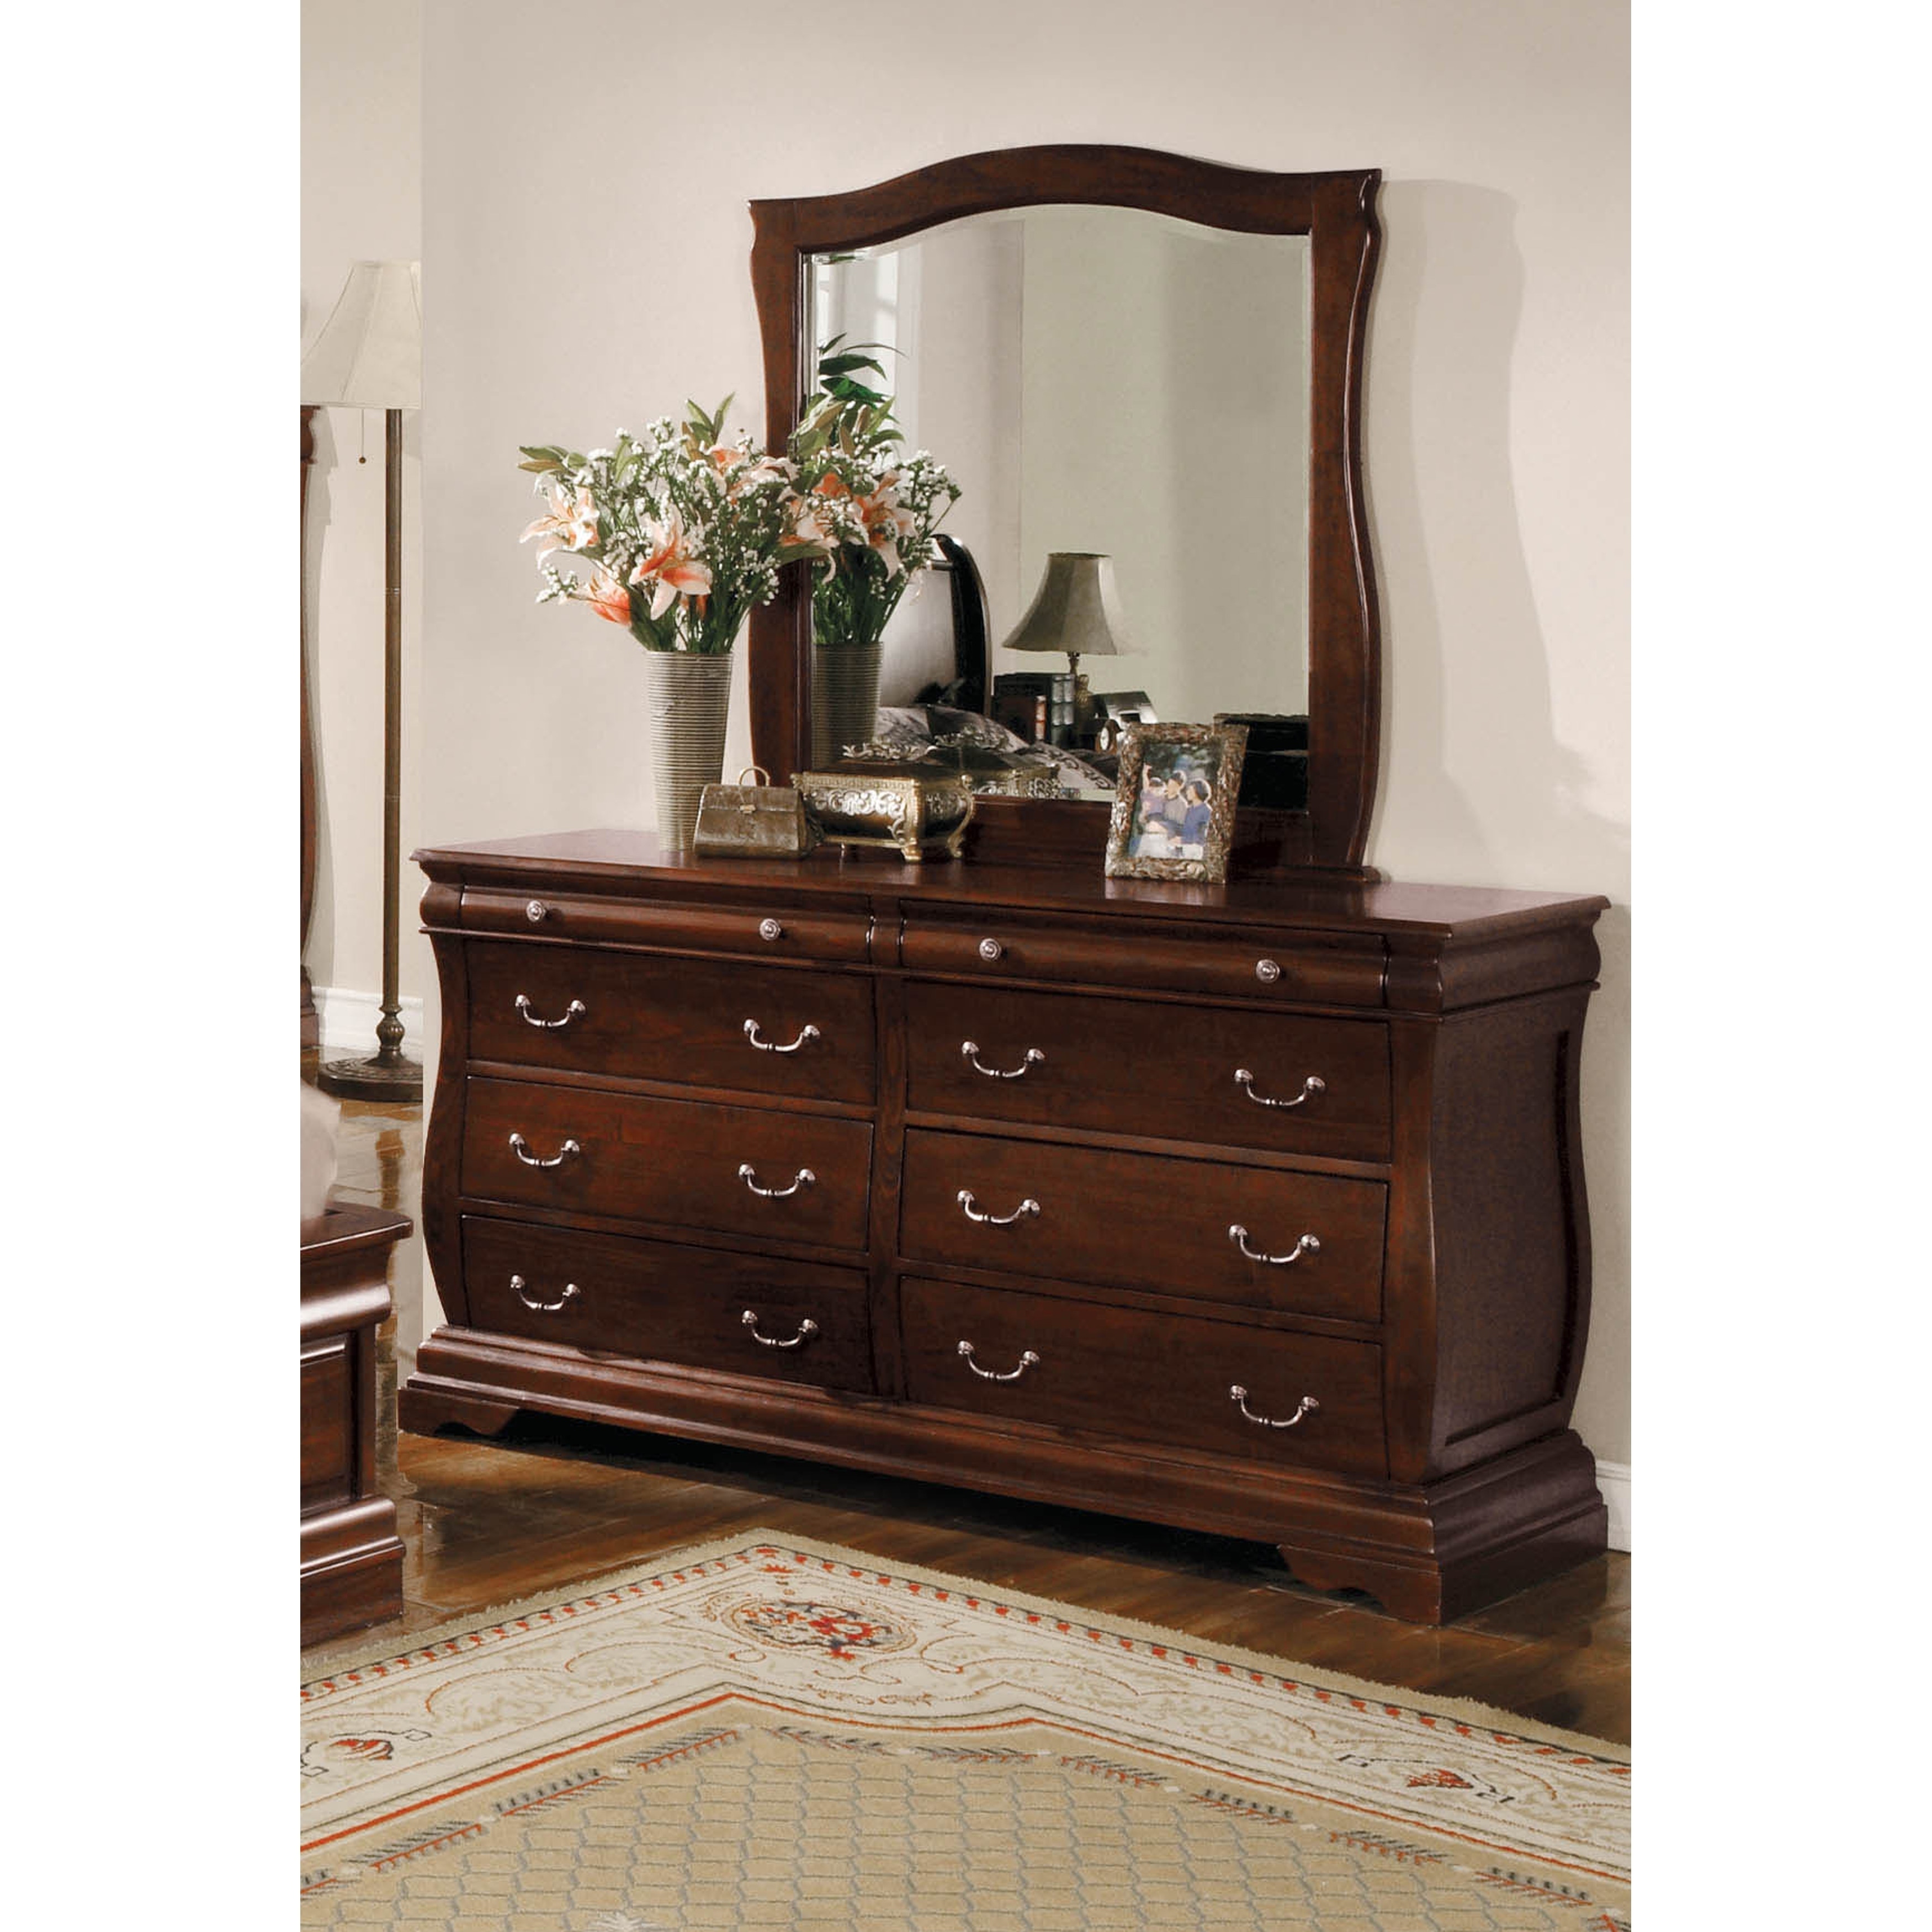 Shop Furniture Of America Rown Pine 2 Piece Dresser And Mirror Set